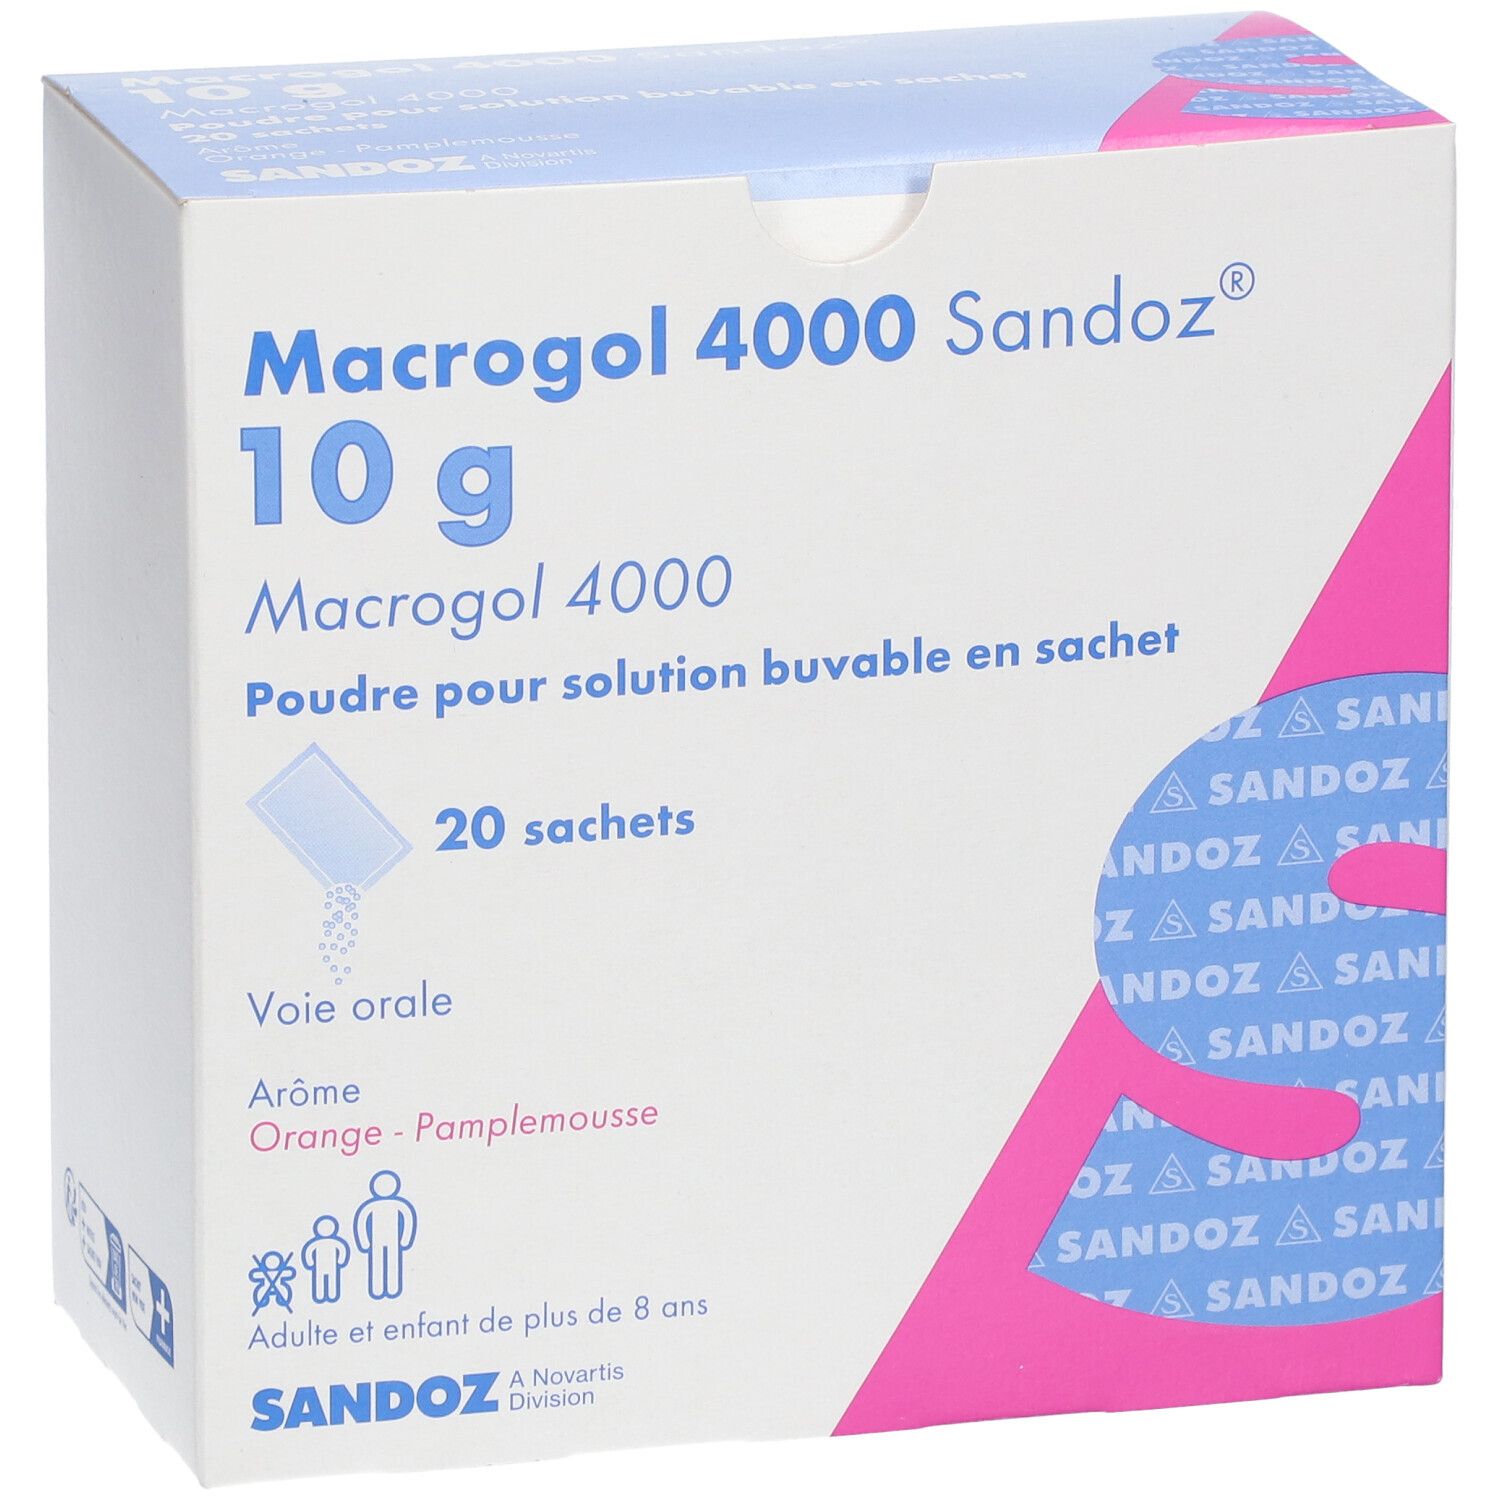 Macrogol 4000 Sandoz®